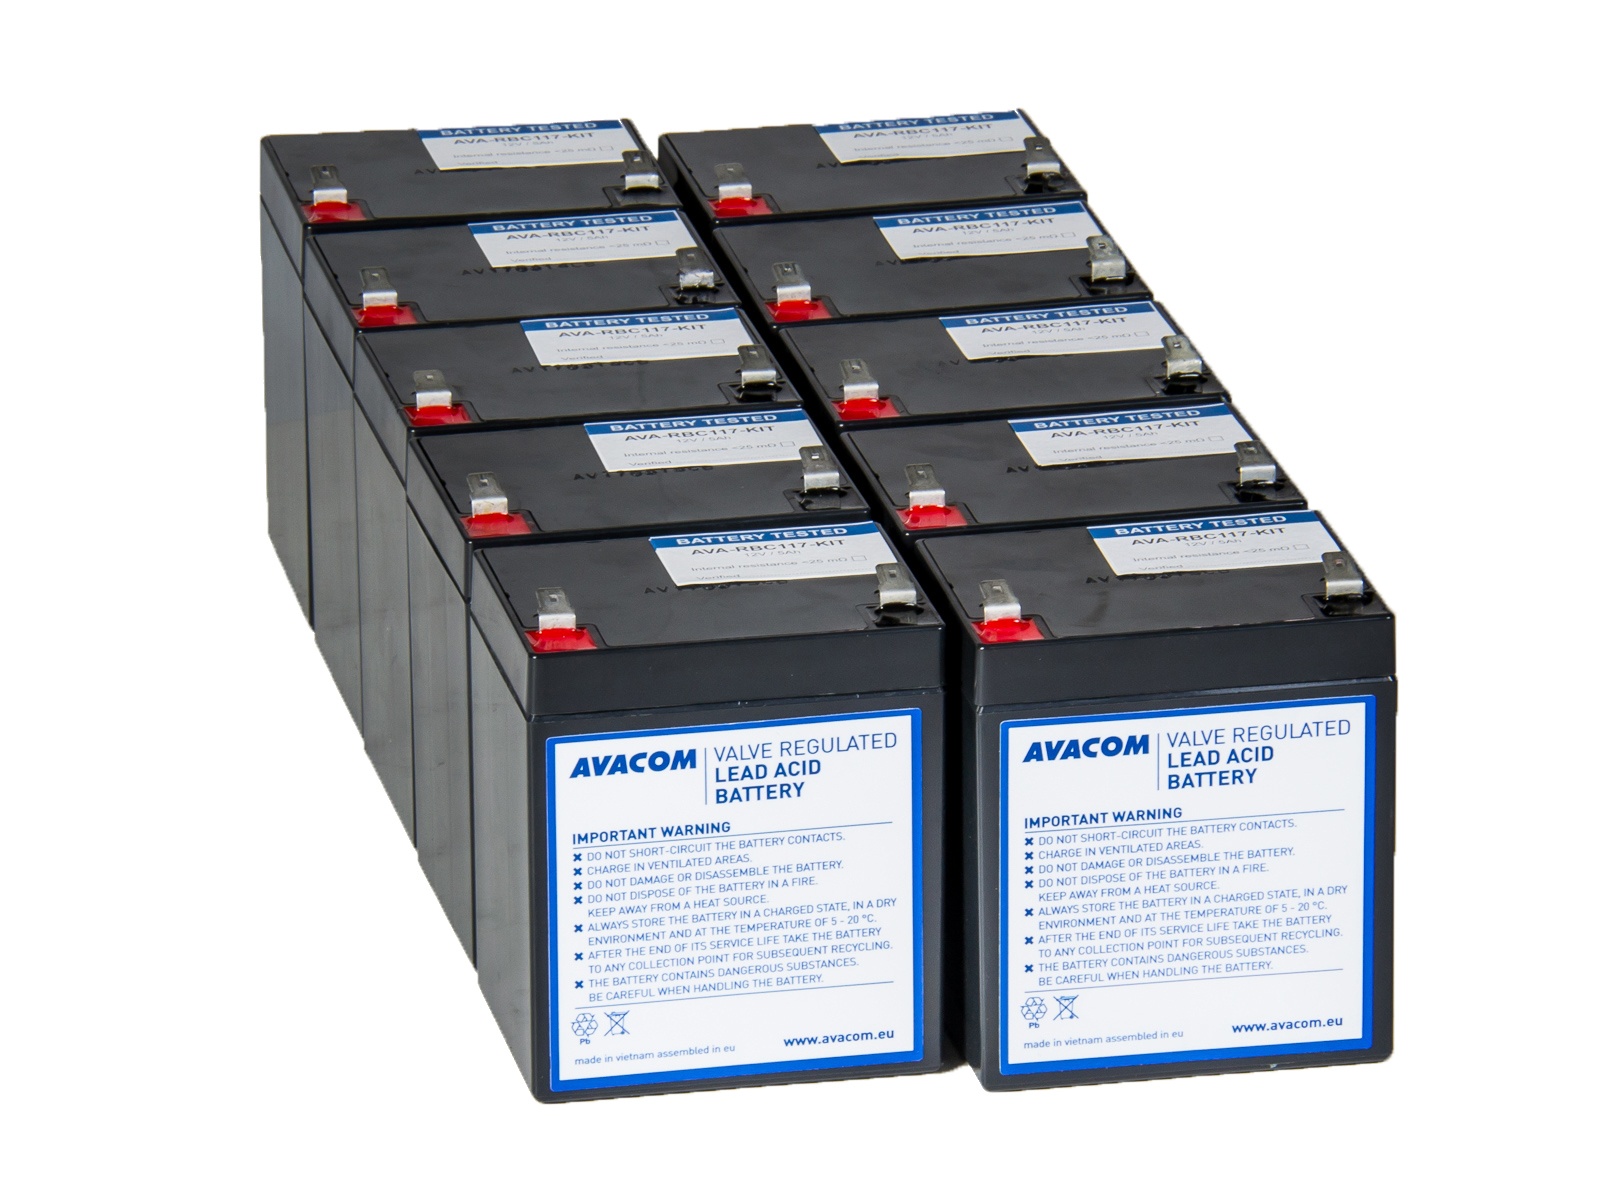 Obrázek AVACOM RBC117 - kit pro renovaci baterie (10ks baterií)